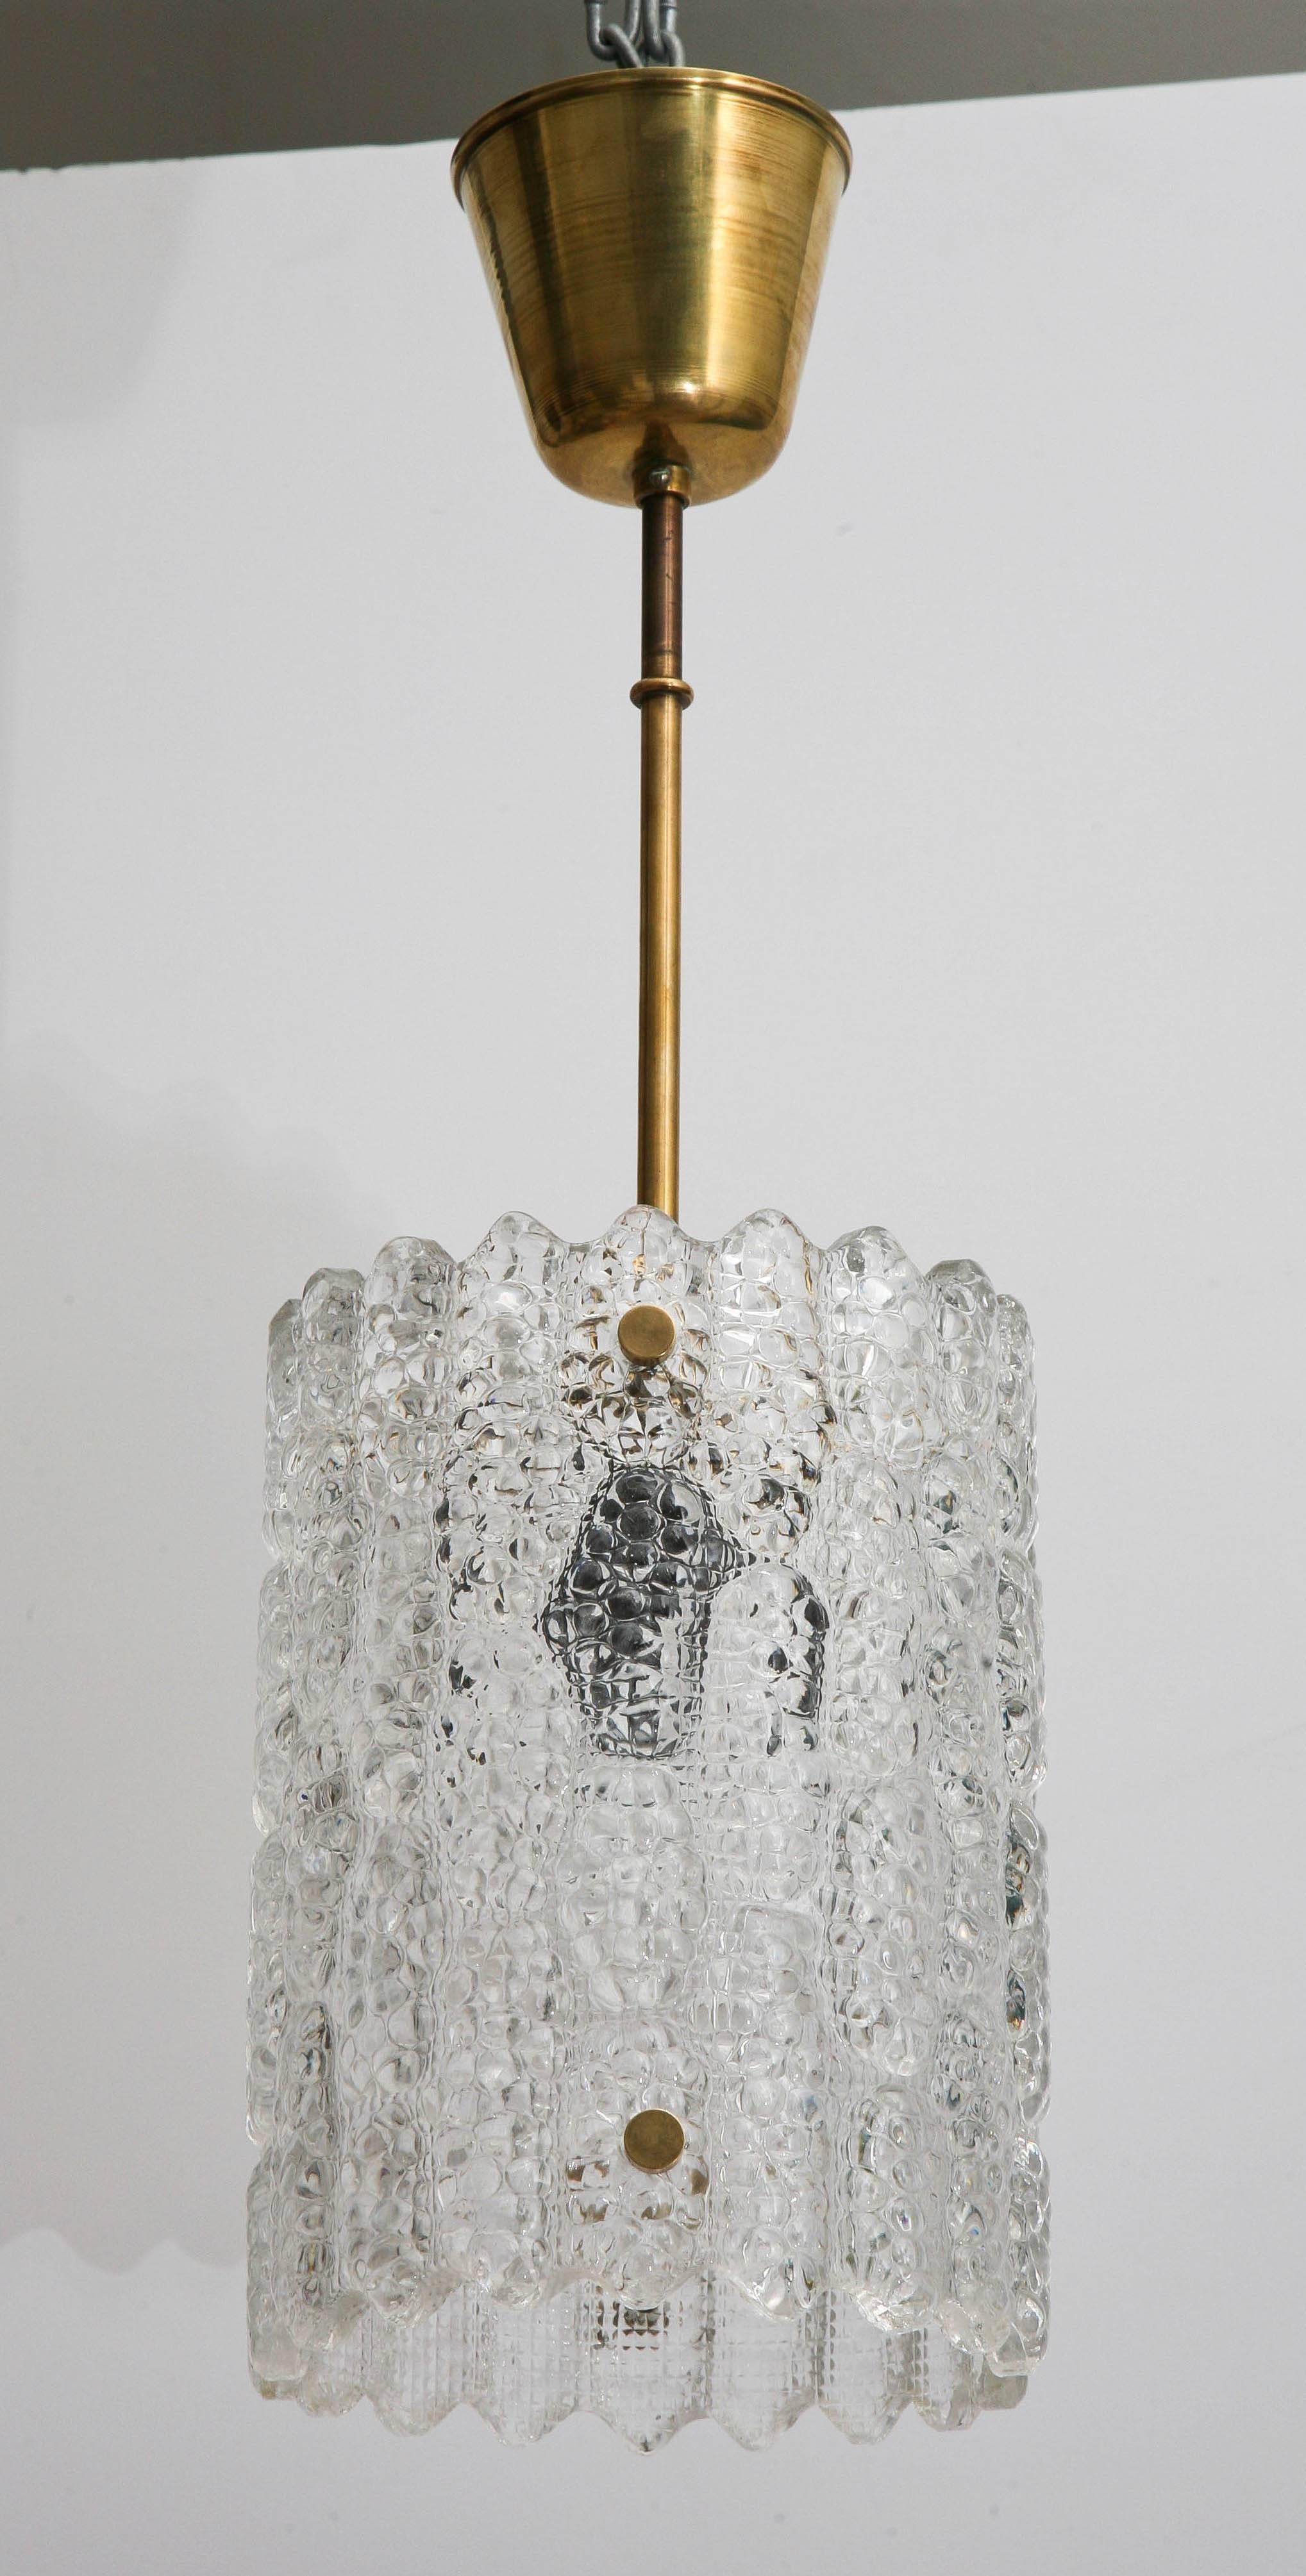 Scandinavian Modern Orrefors Crystal Pendant Light by Carl Fagerlund, Swedish, 1960s For Sale